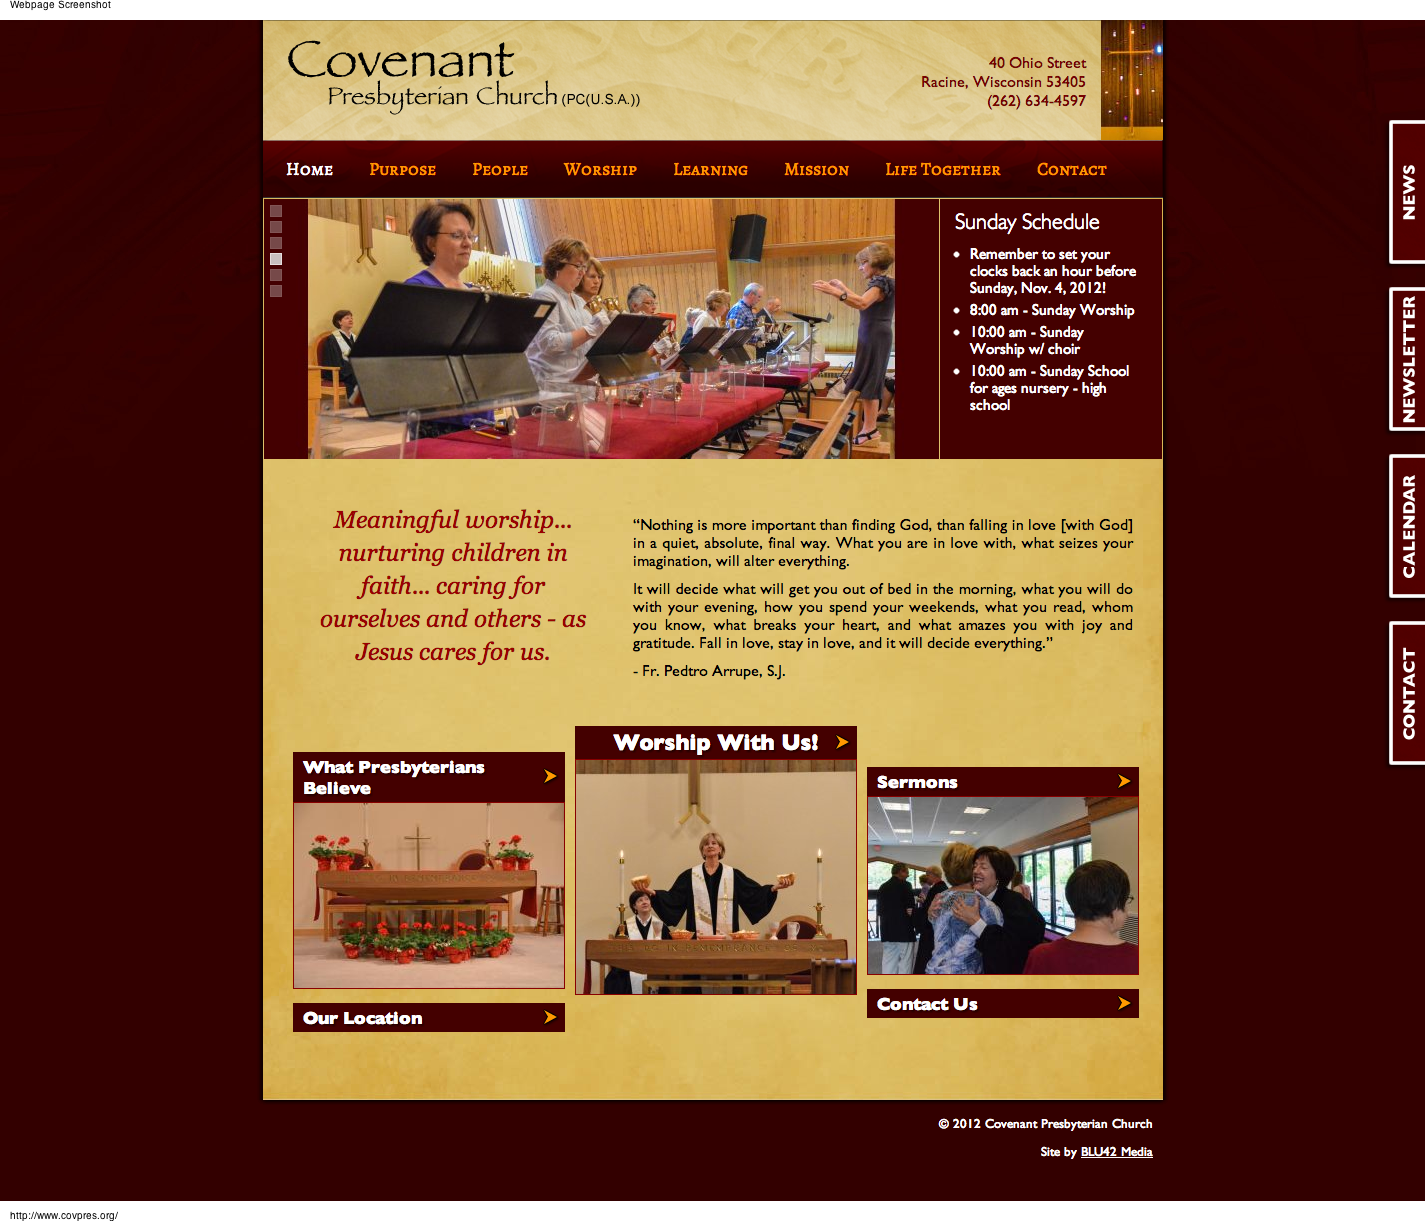 Covenant Presbytarian Church (BLU42 Media)